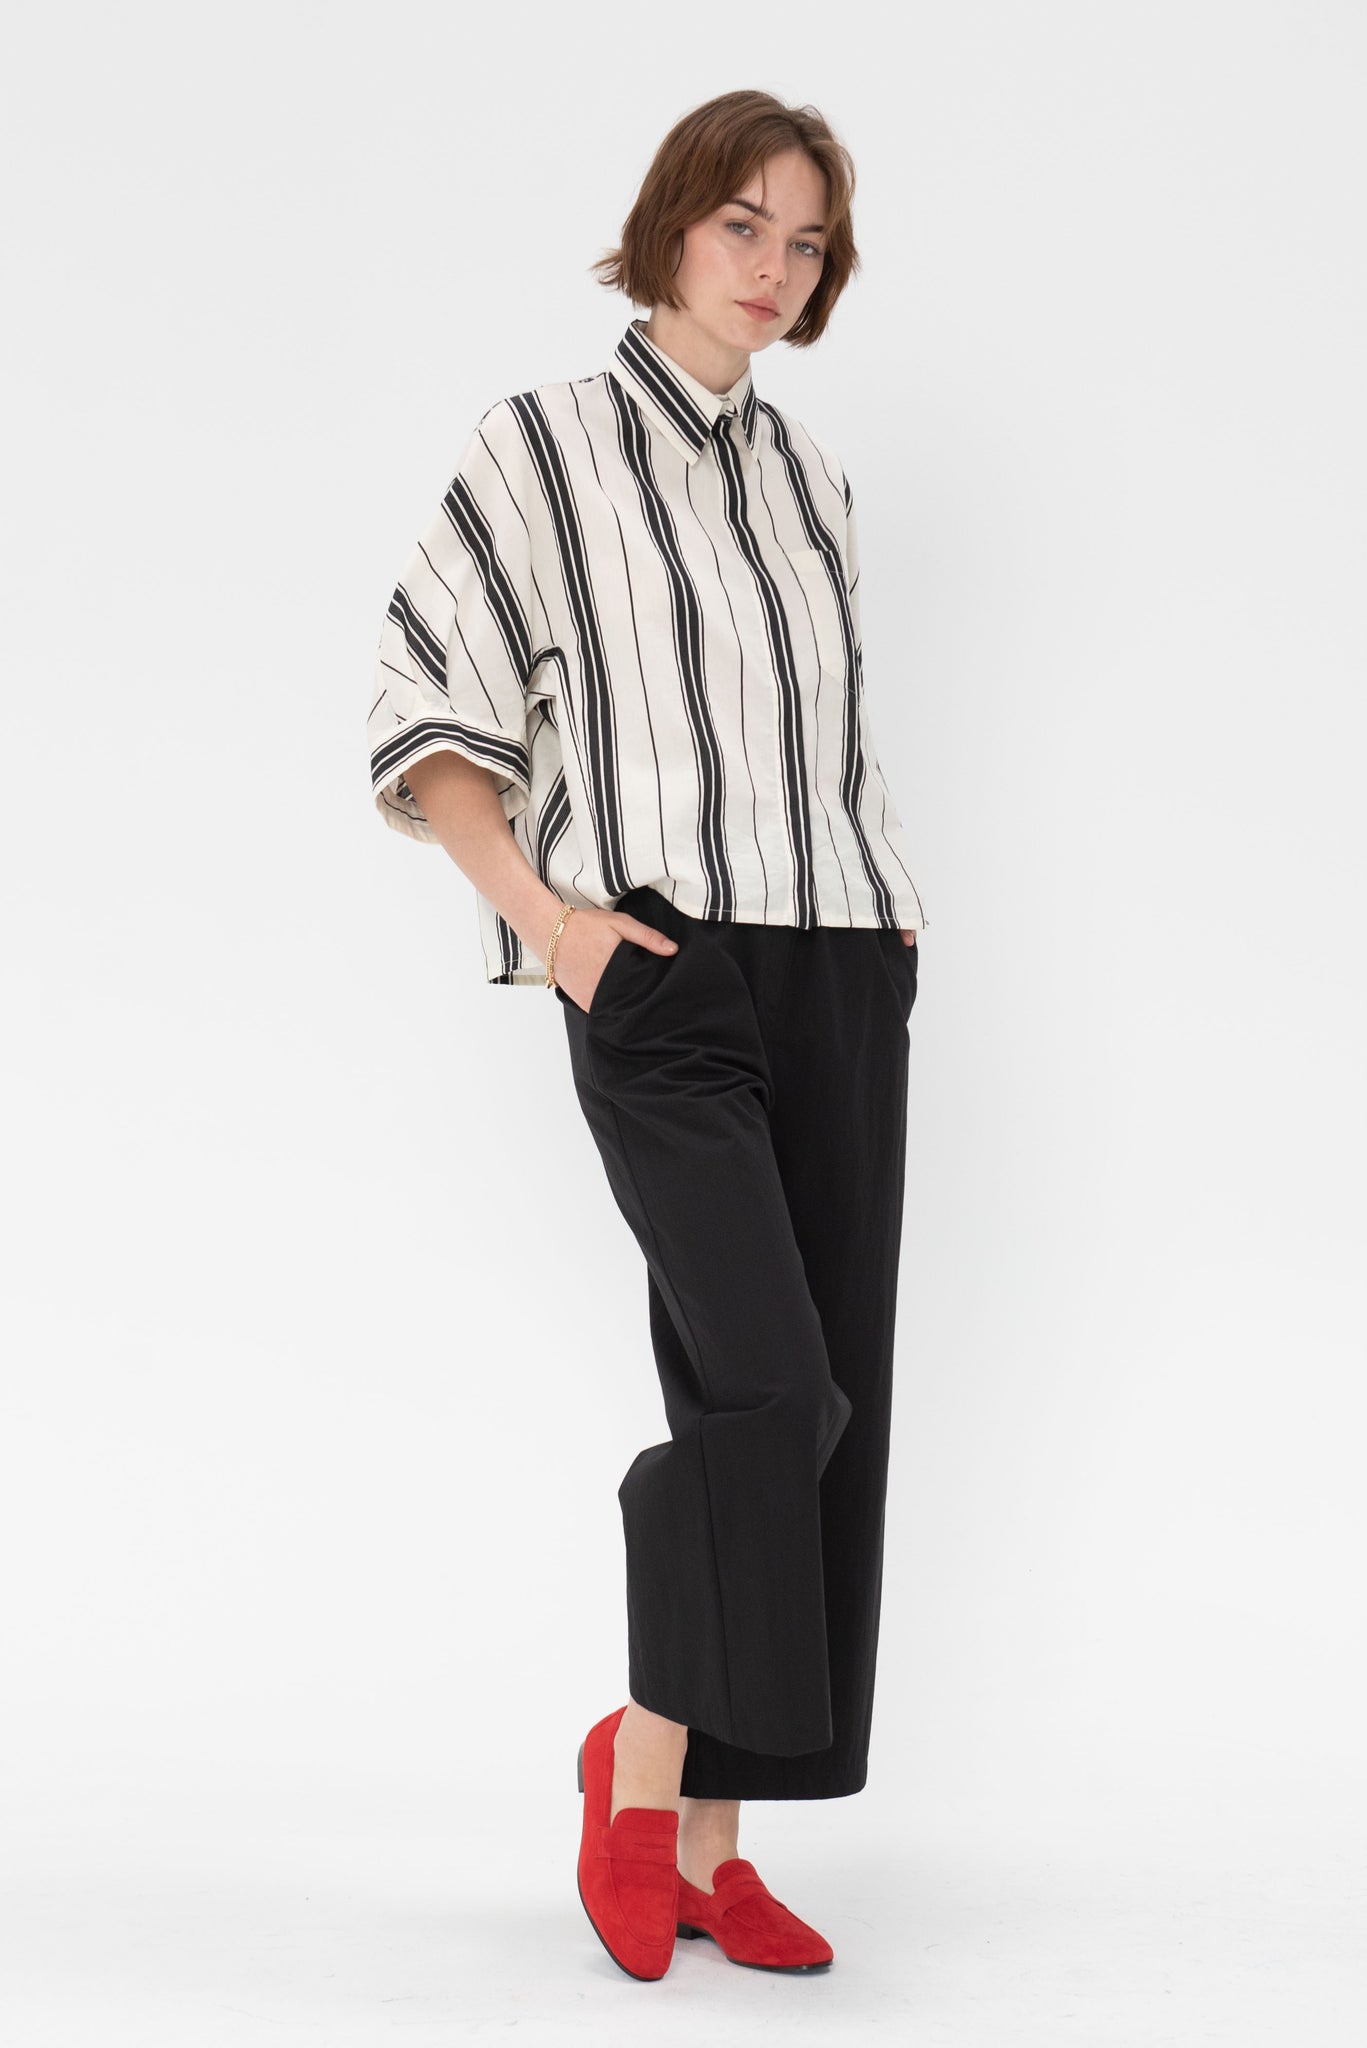 Christian Wijnants - Taka Boxy Shirt, White & Black Stripes